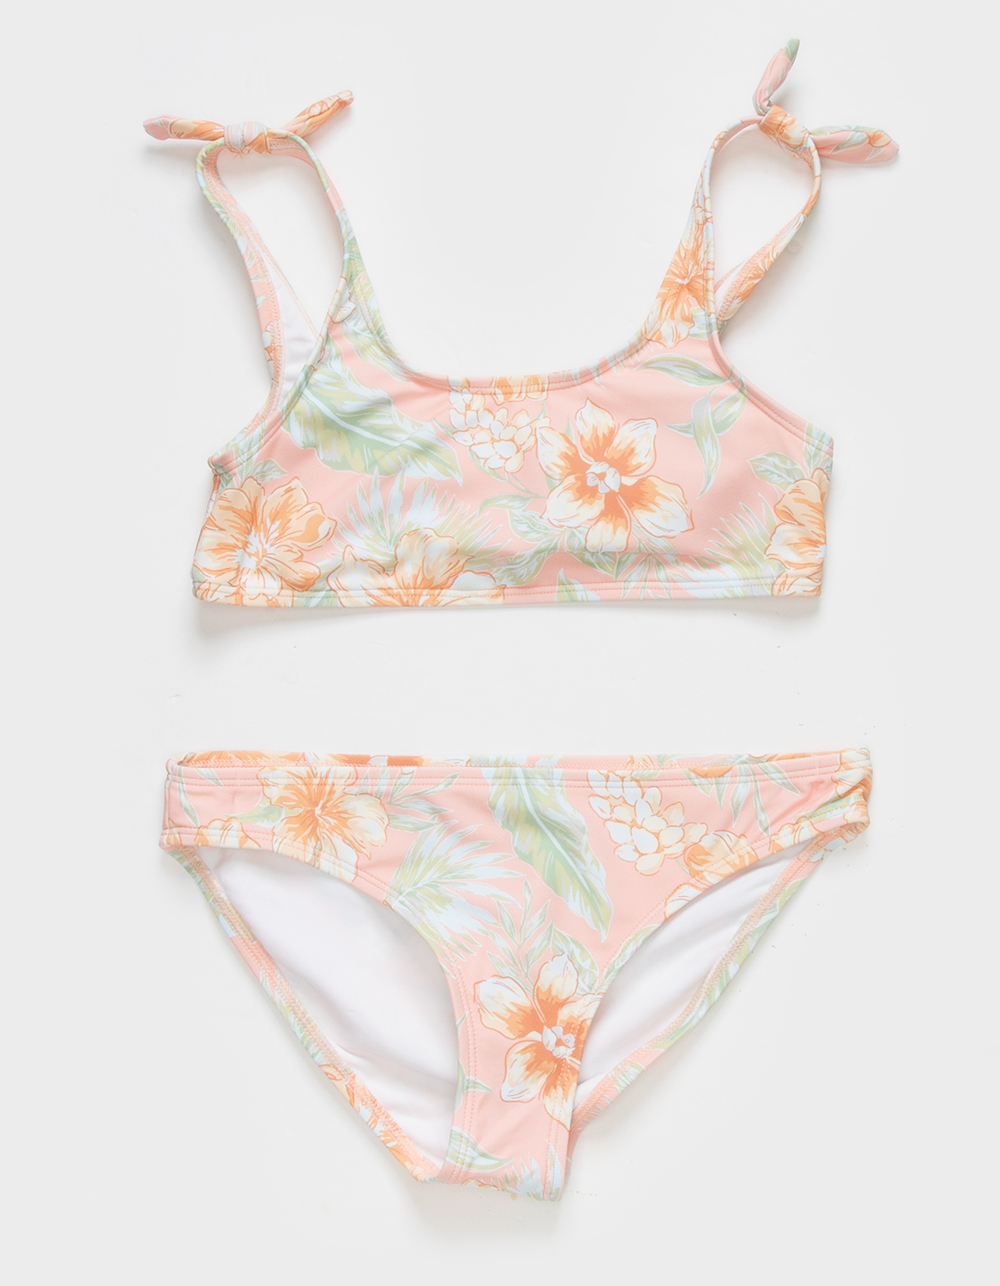 RIP CURL Always Summer Girls Bralette Bikini Set - PINK COMBO | Tillys